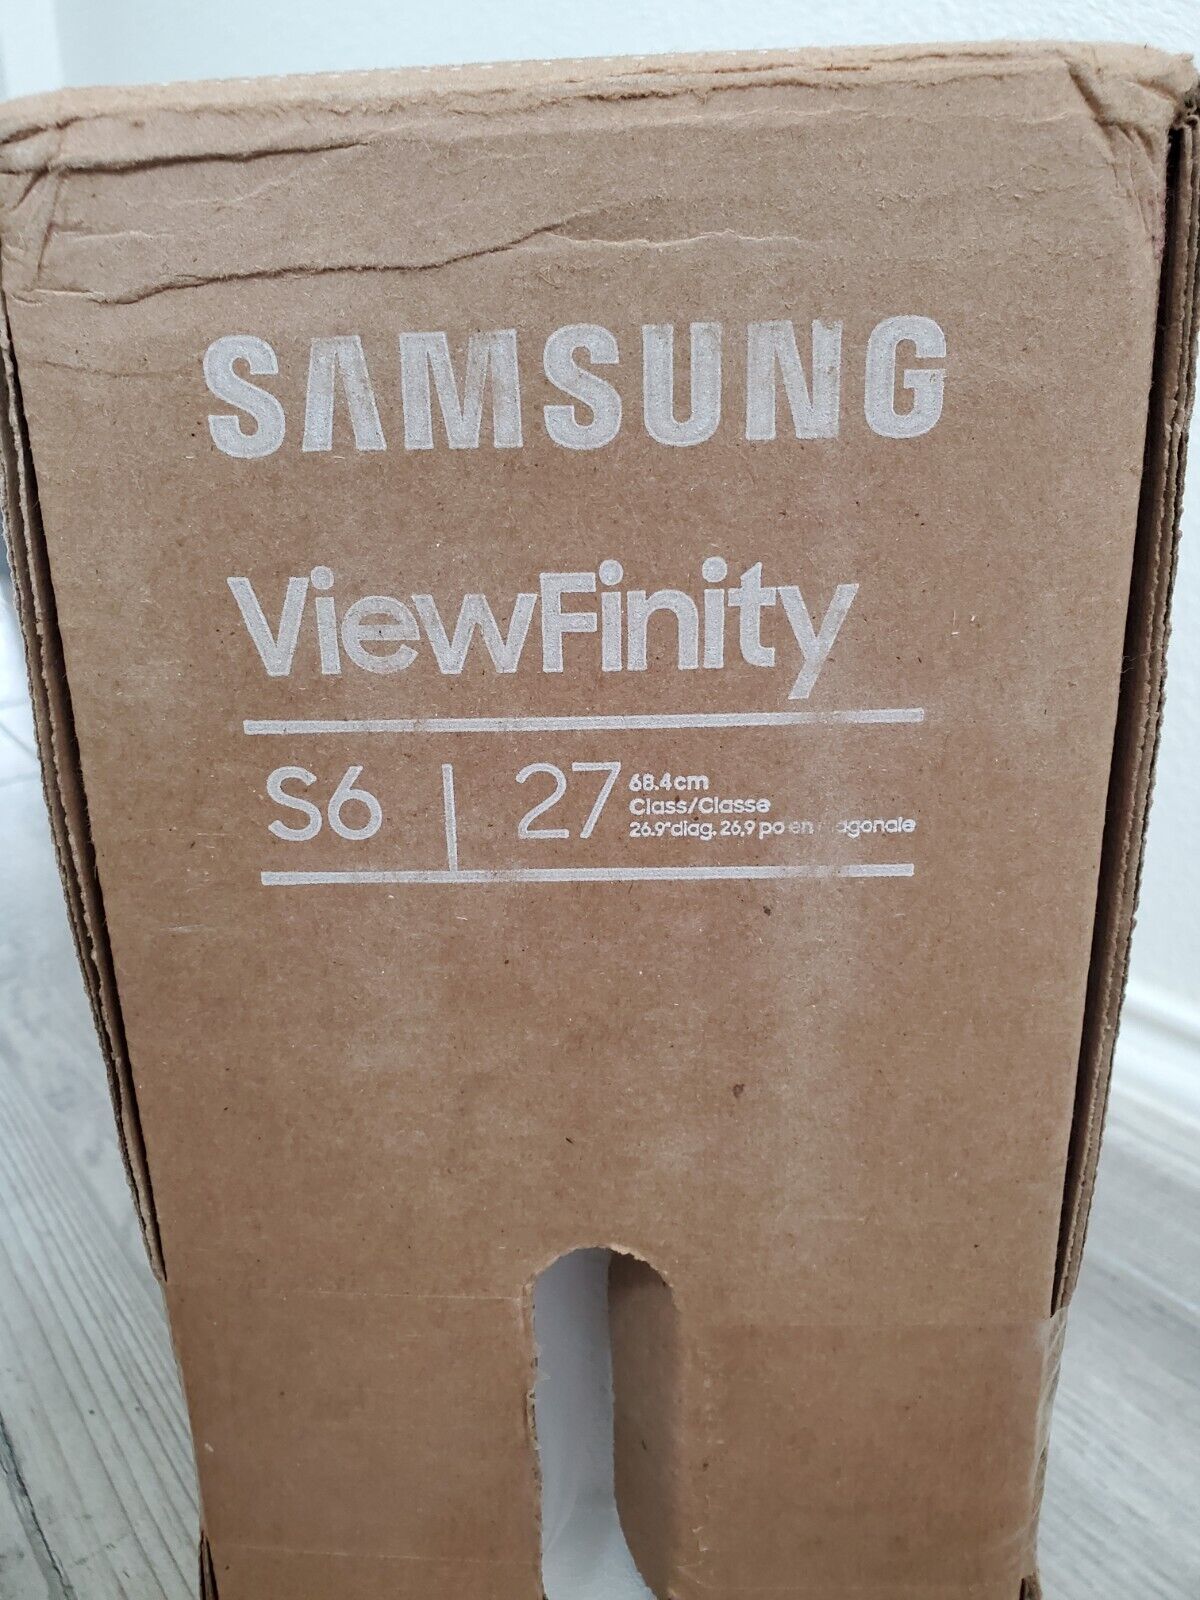 SAMSUNG S6 Series 27-Inch Viewfinity Computer Monitor - S27A600UU - New